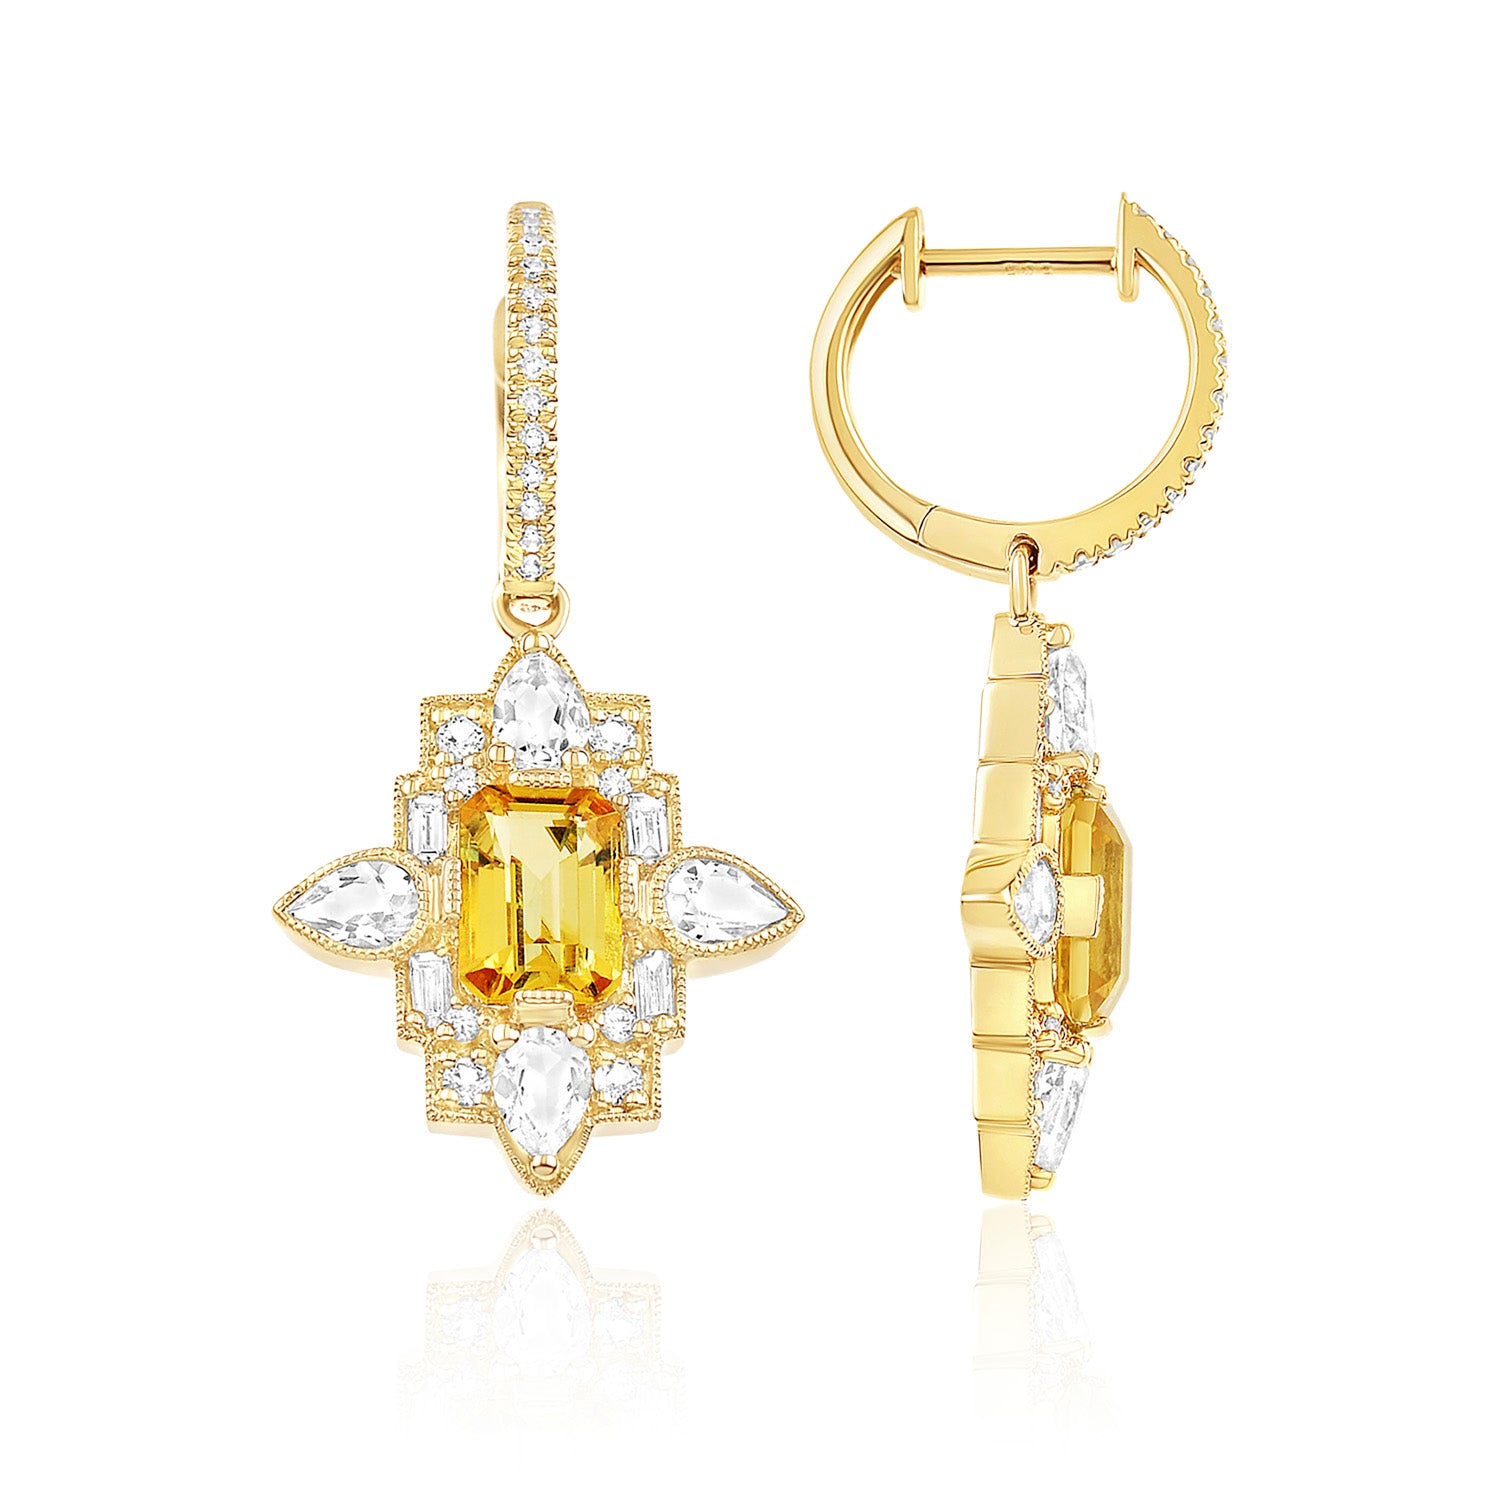 Luvente 14 Karat Yellow Gold Floral Art Deco Earrings - Colored Stone Earrings